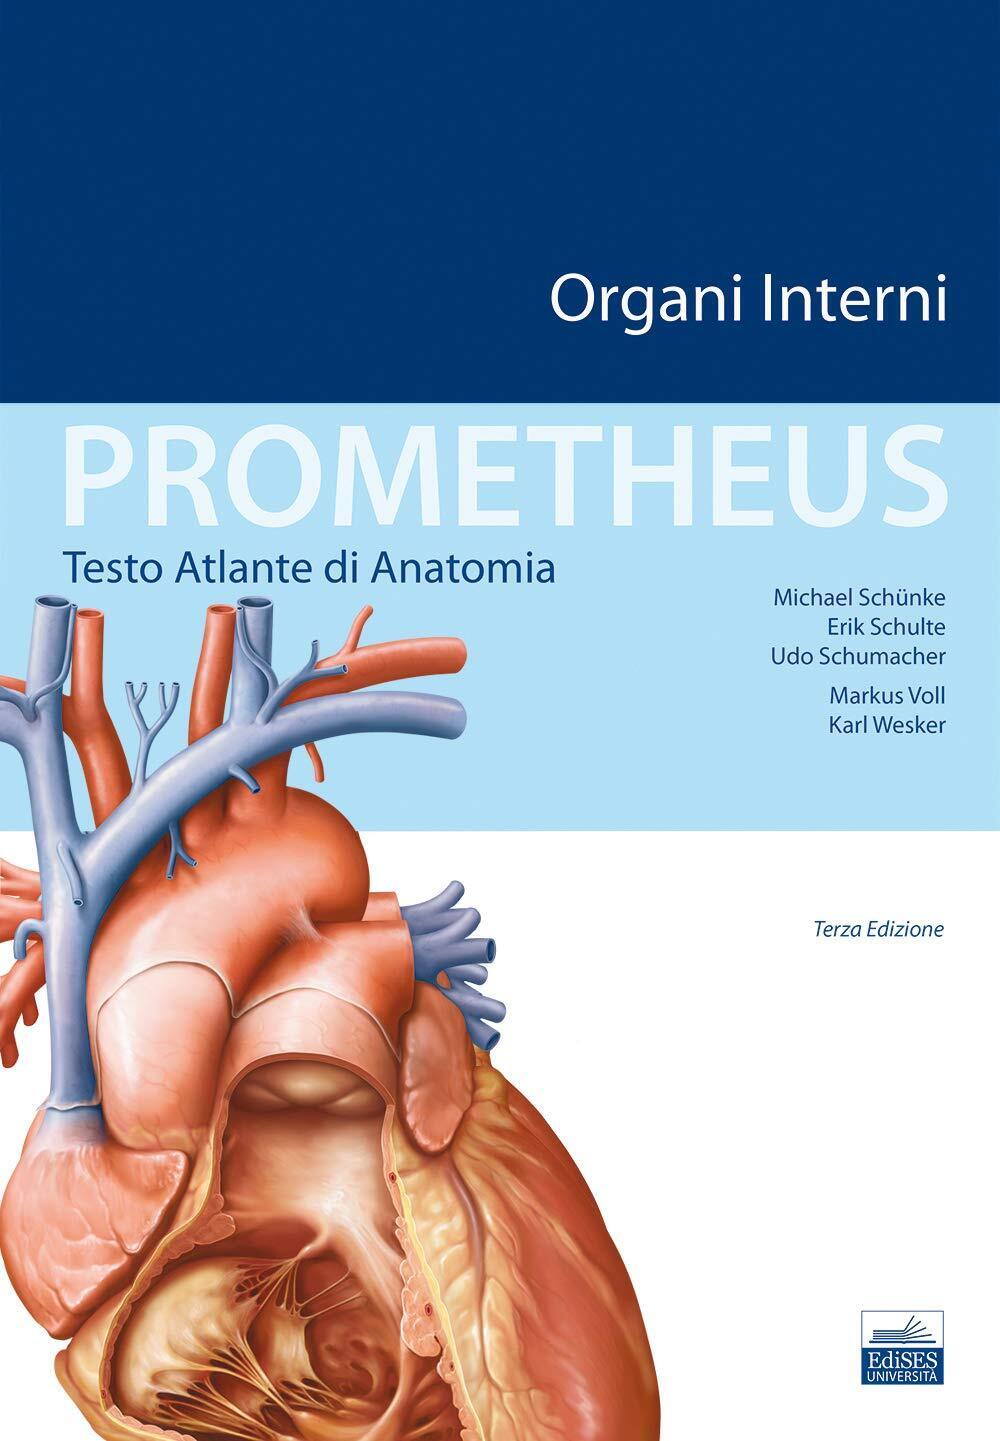 Prometheus. Testo atlante di anatomia. Organi interni - Edises, 2020 libro usato